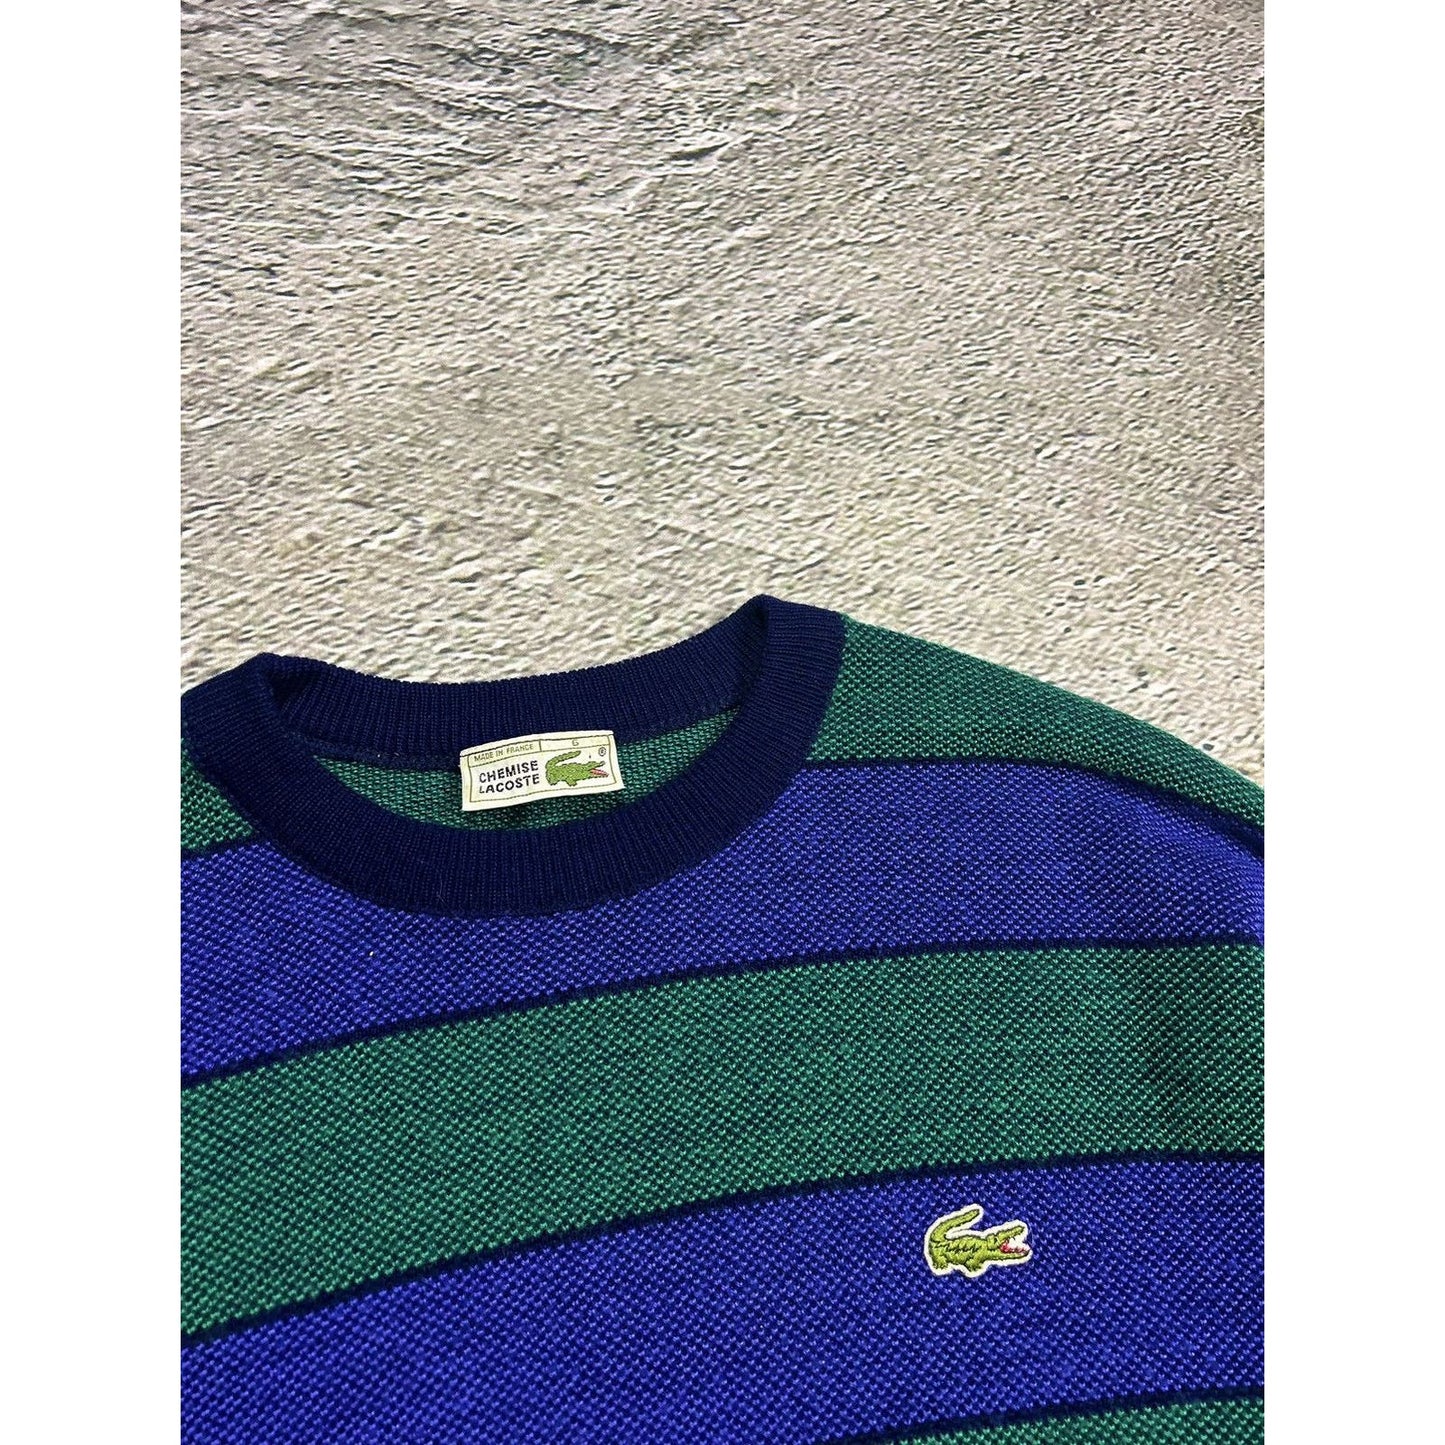 Lacoste sweater vintage purple green small logo striped